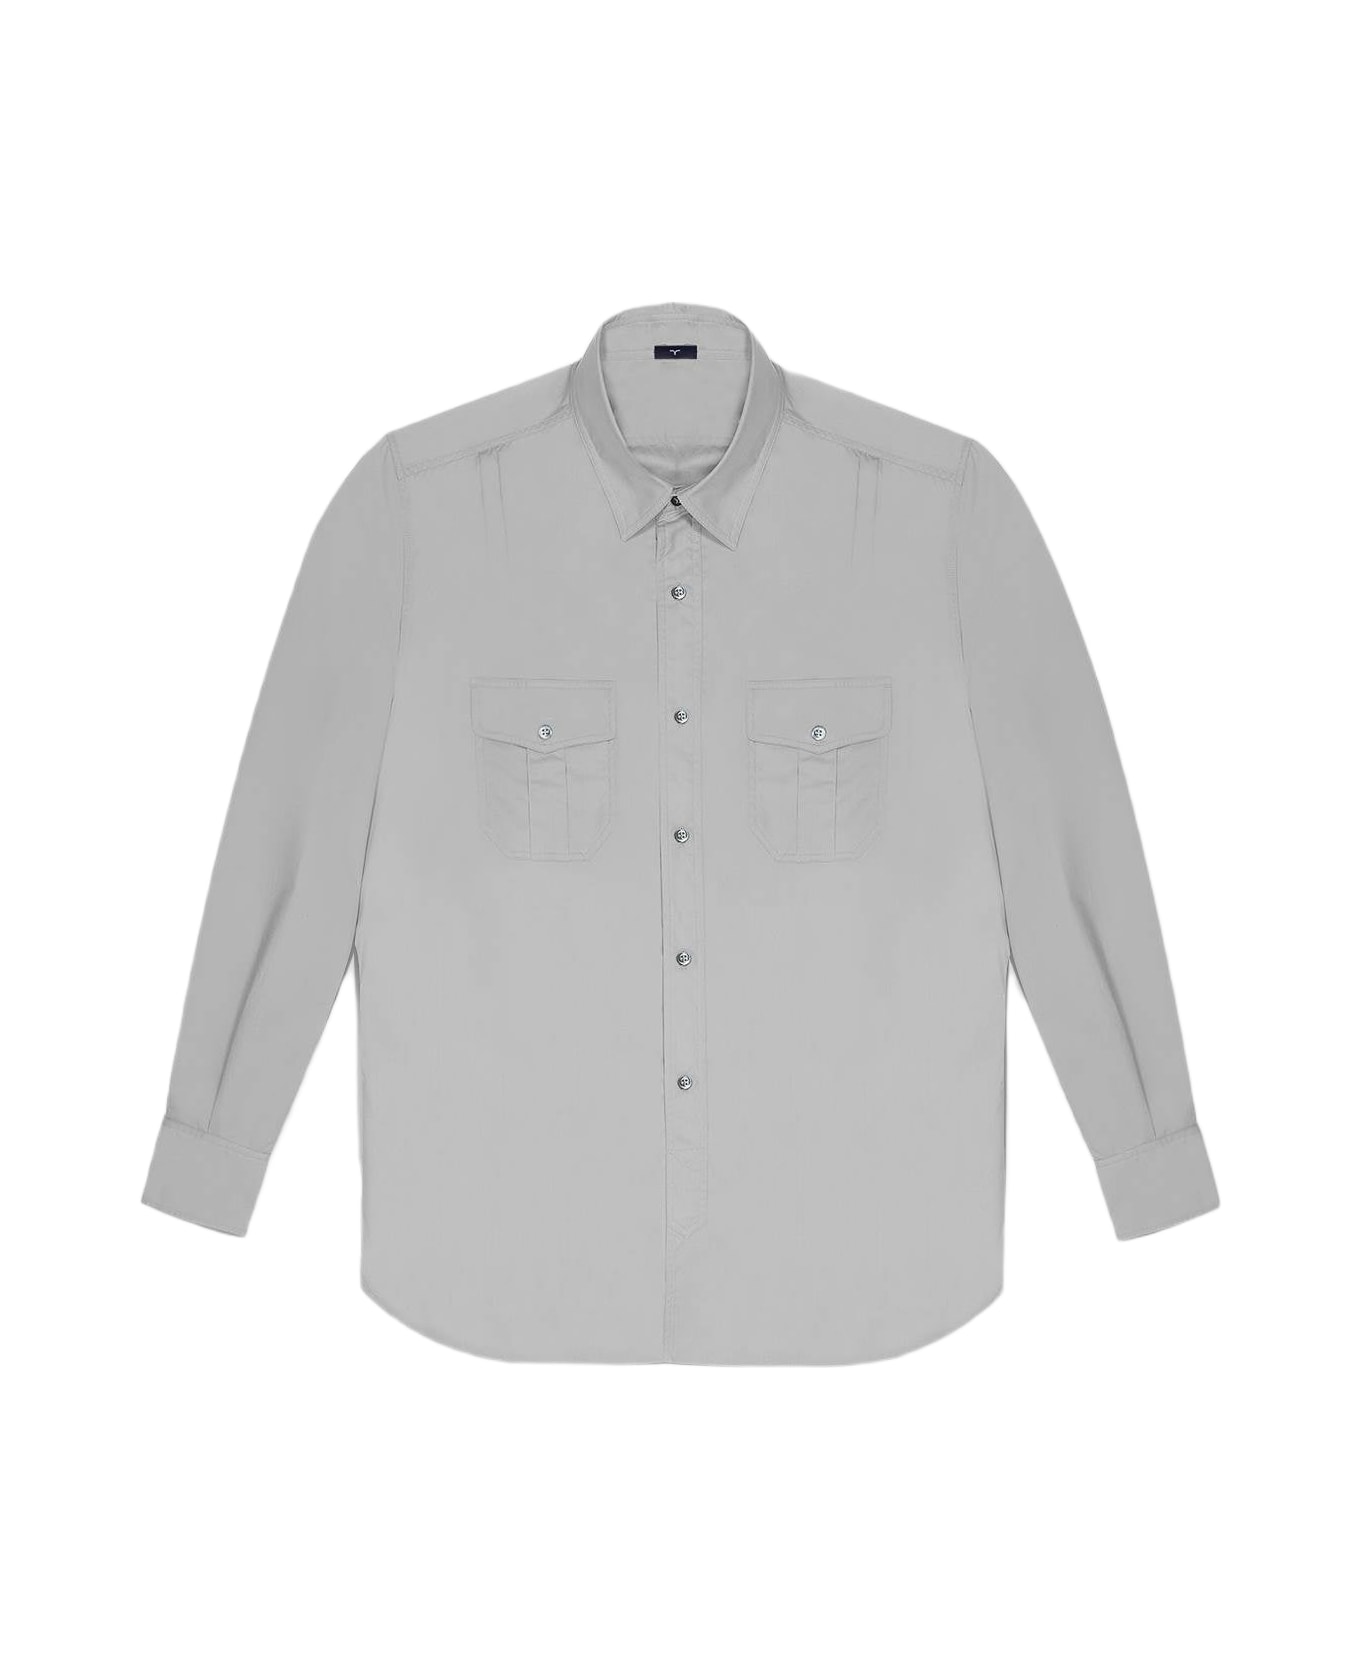 Larusmiani Military Cotton Shirt Shirt - LightGray